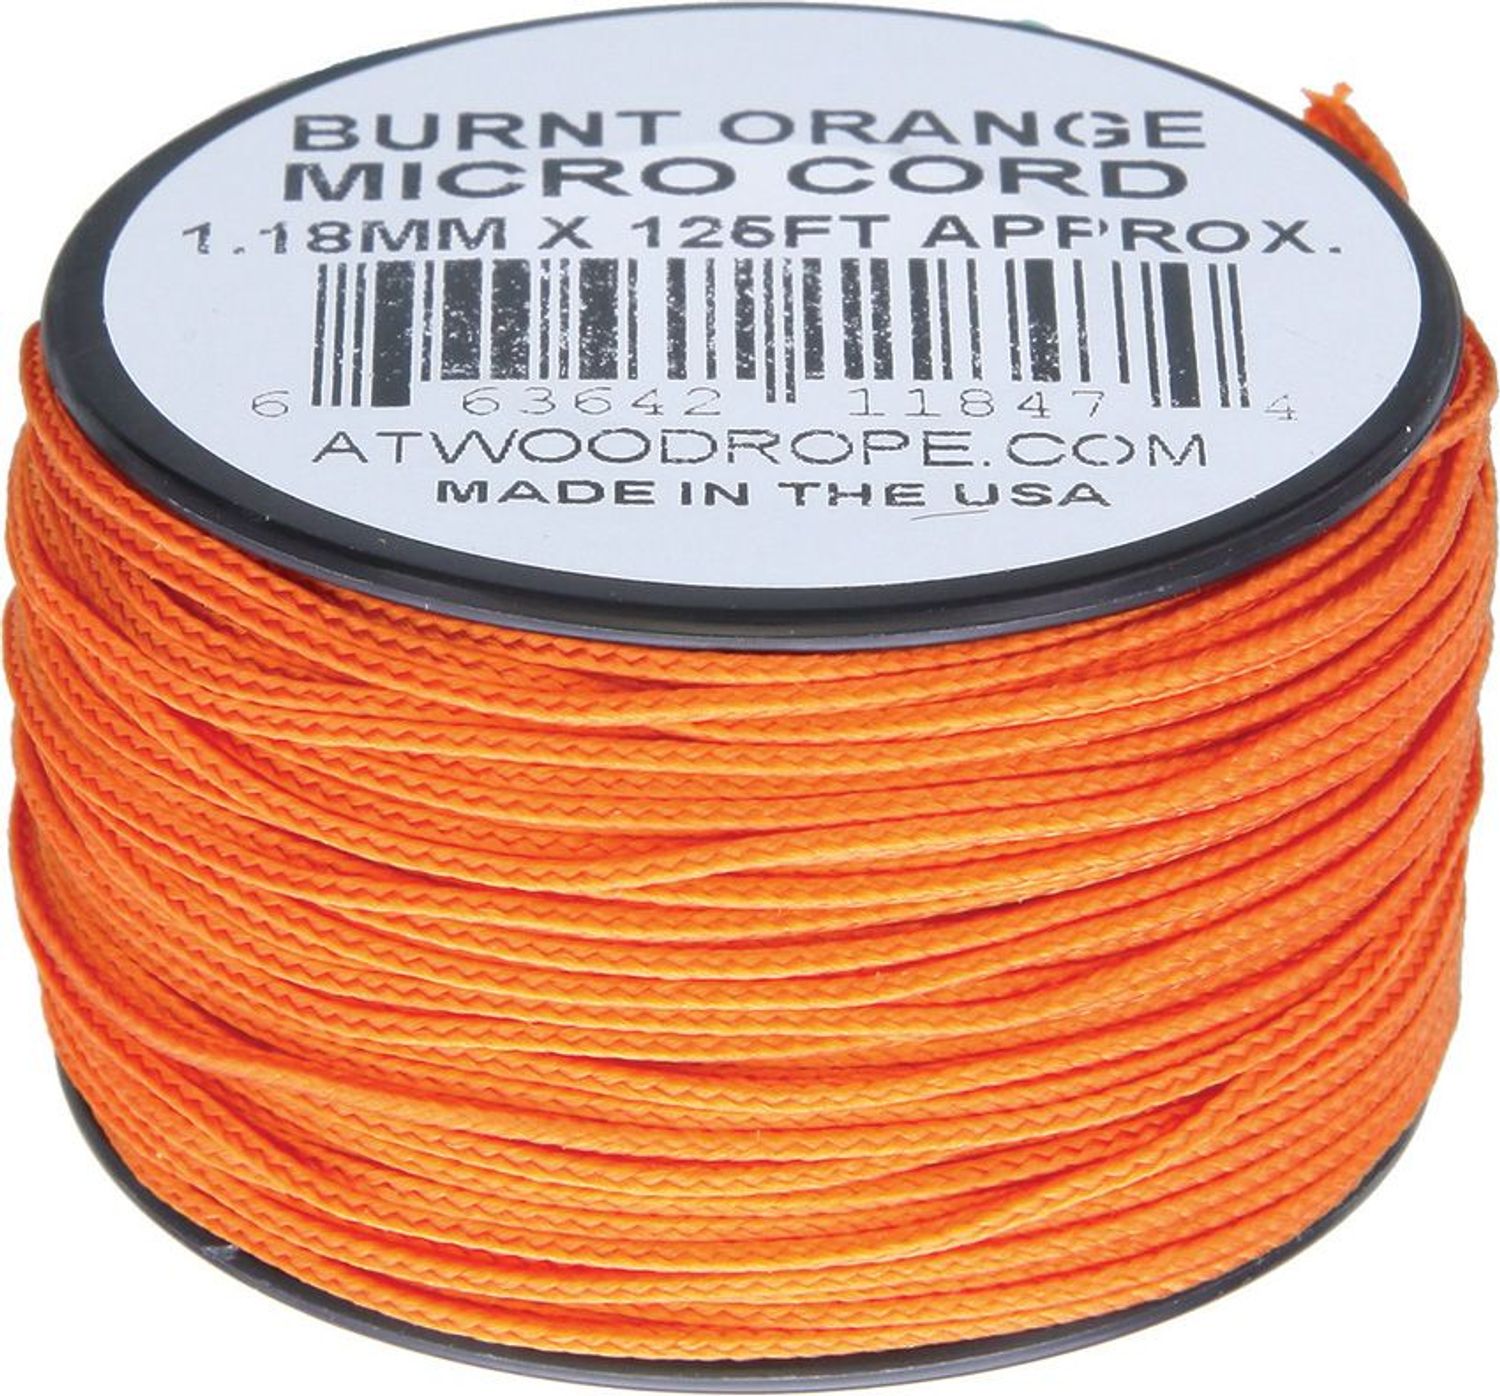 Atwood Rope Micro Cord, Burnt Orange, 125 Feet - KnifeCenter - RG1288